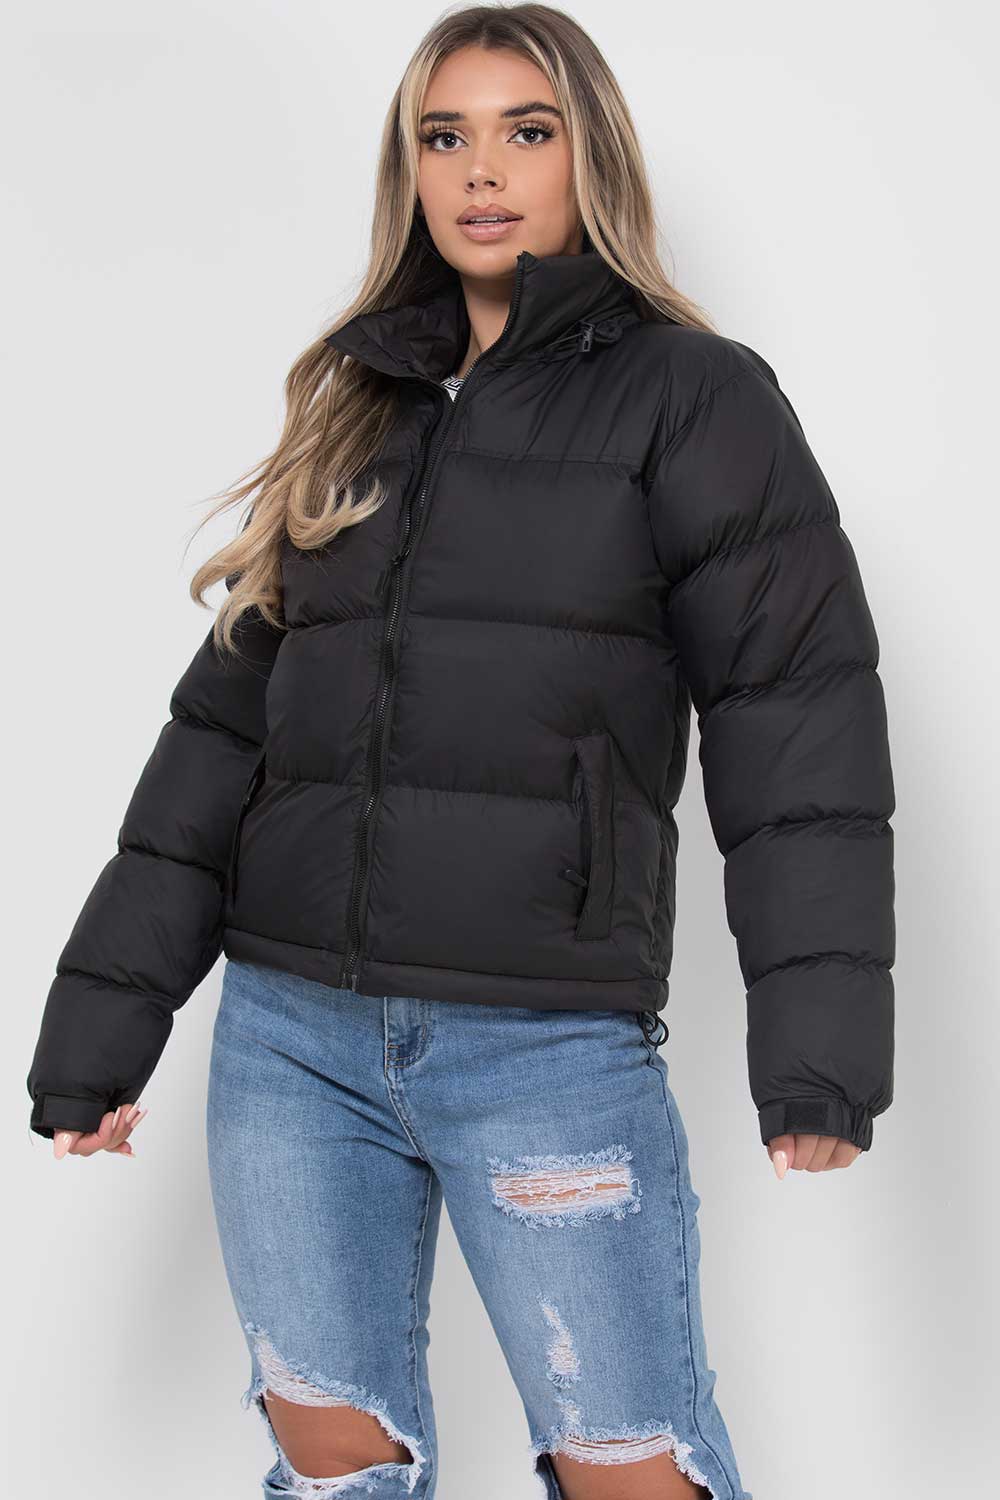 Black Puffer Jacket North Face Inspired Styledup Fashion 